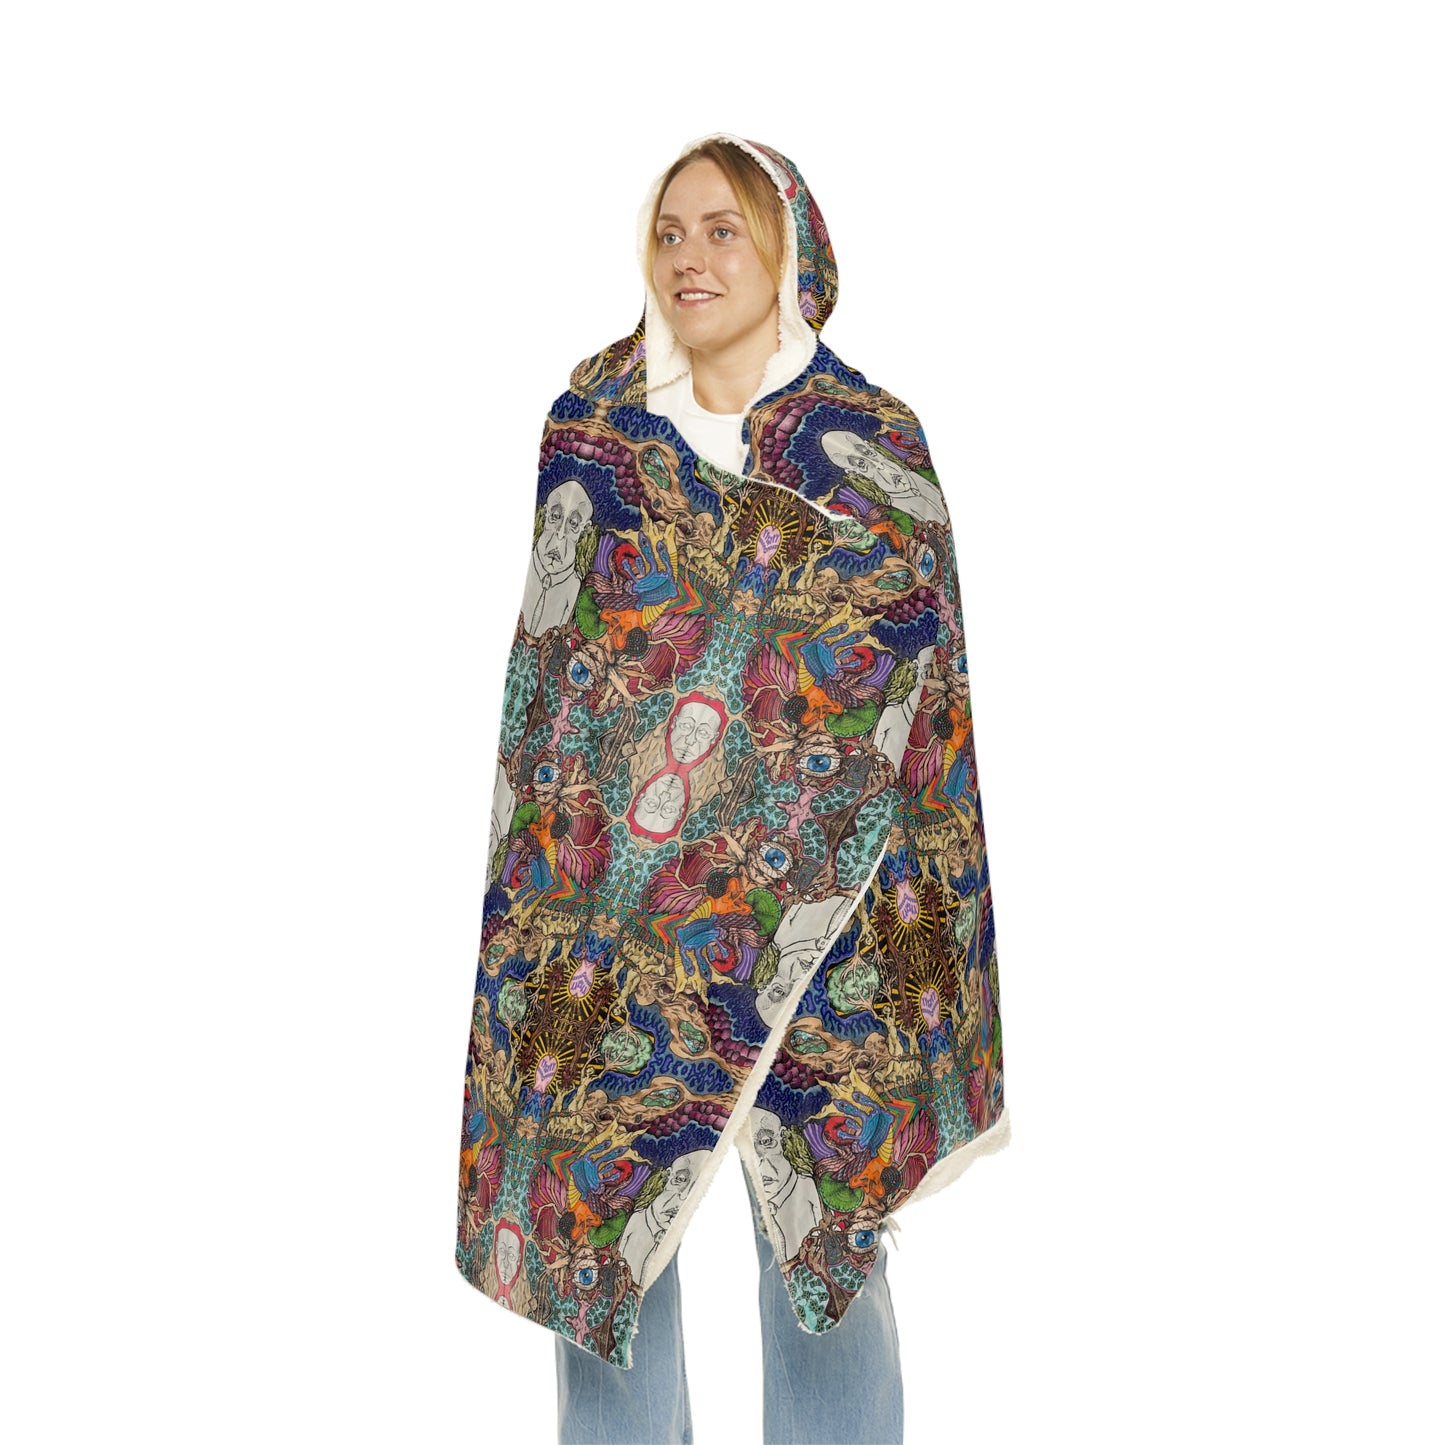 "Quarantine Feels" Super comfy hooded blanket